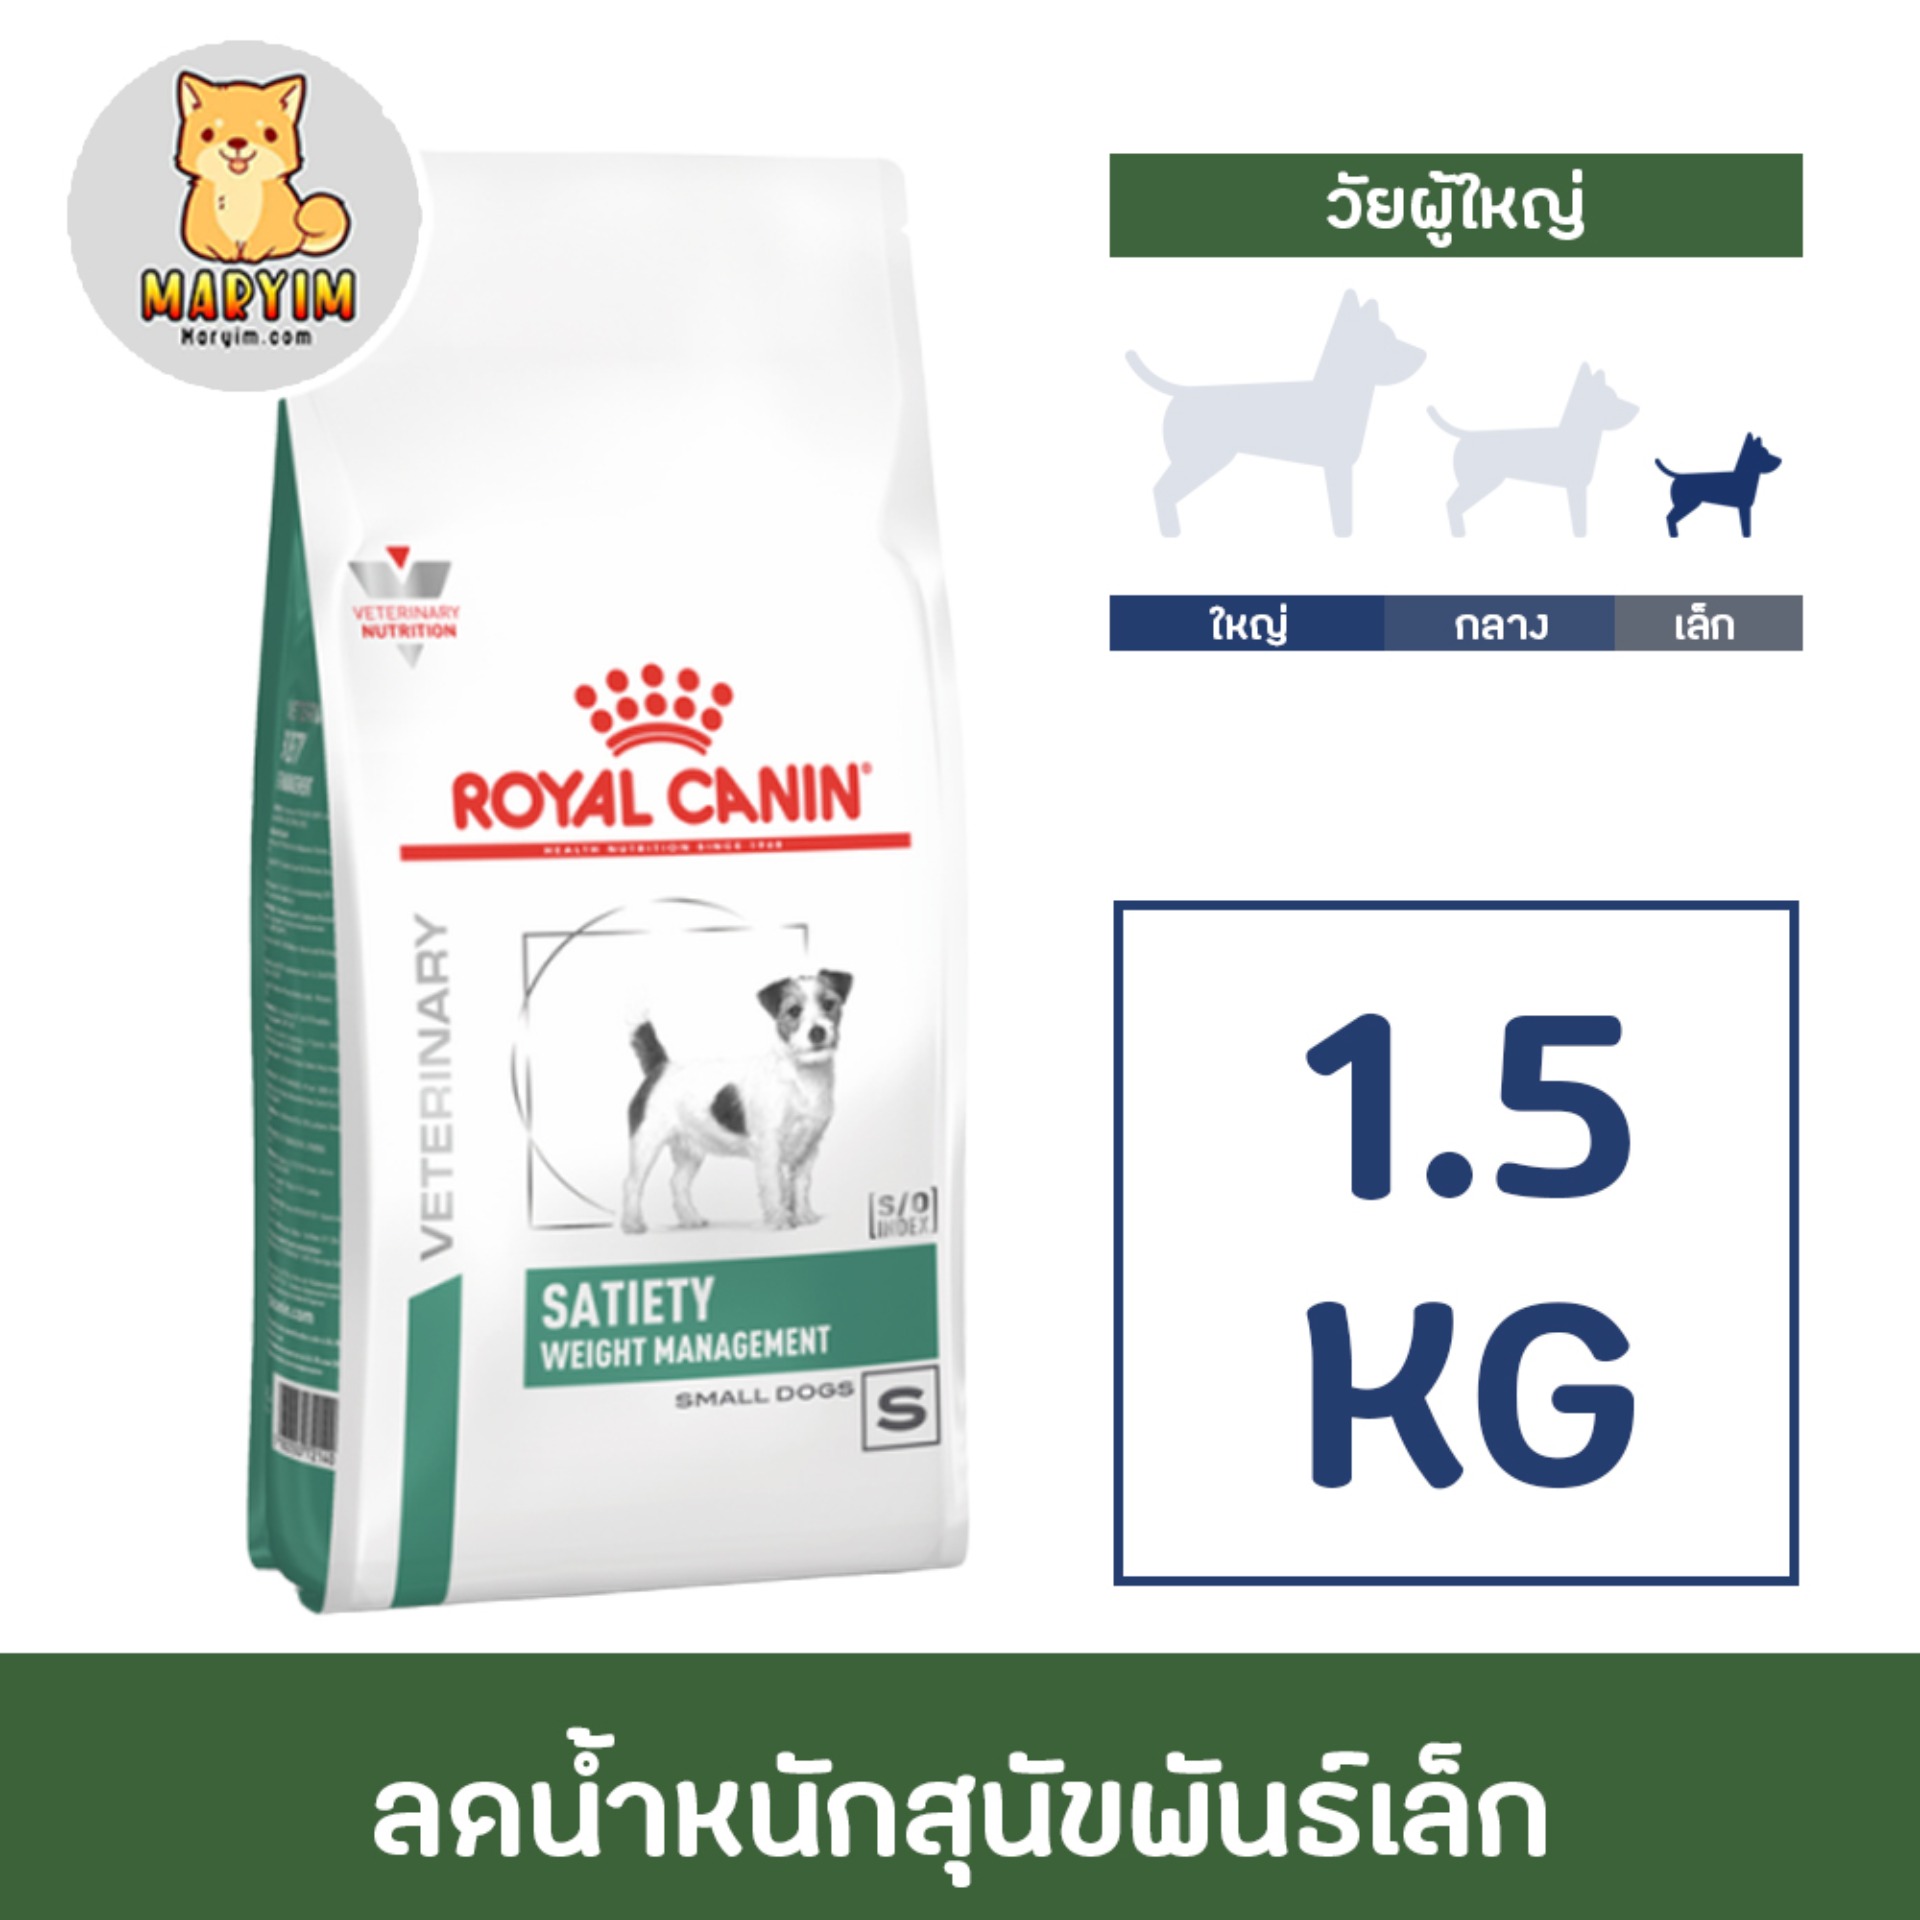 Royal canin satiety small dog 1.5 kg โรยัล คานิน อาหารสุนัขลดน้ำหนัก อาหารสุนัข พันธุ์เล็ก สูตรลดน้ำหนัก 1.5กก. (พันธุ์เล็ก)